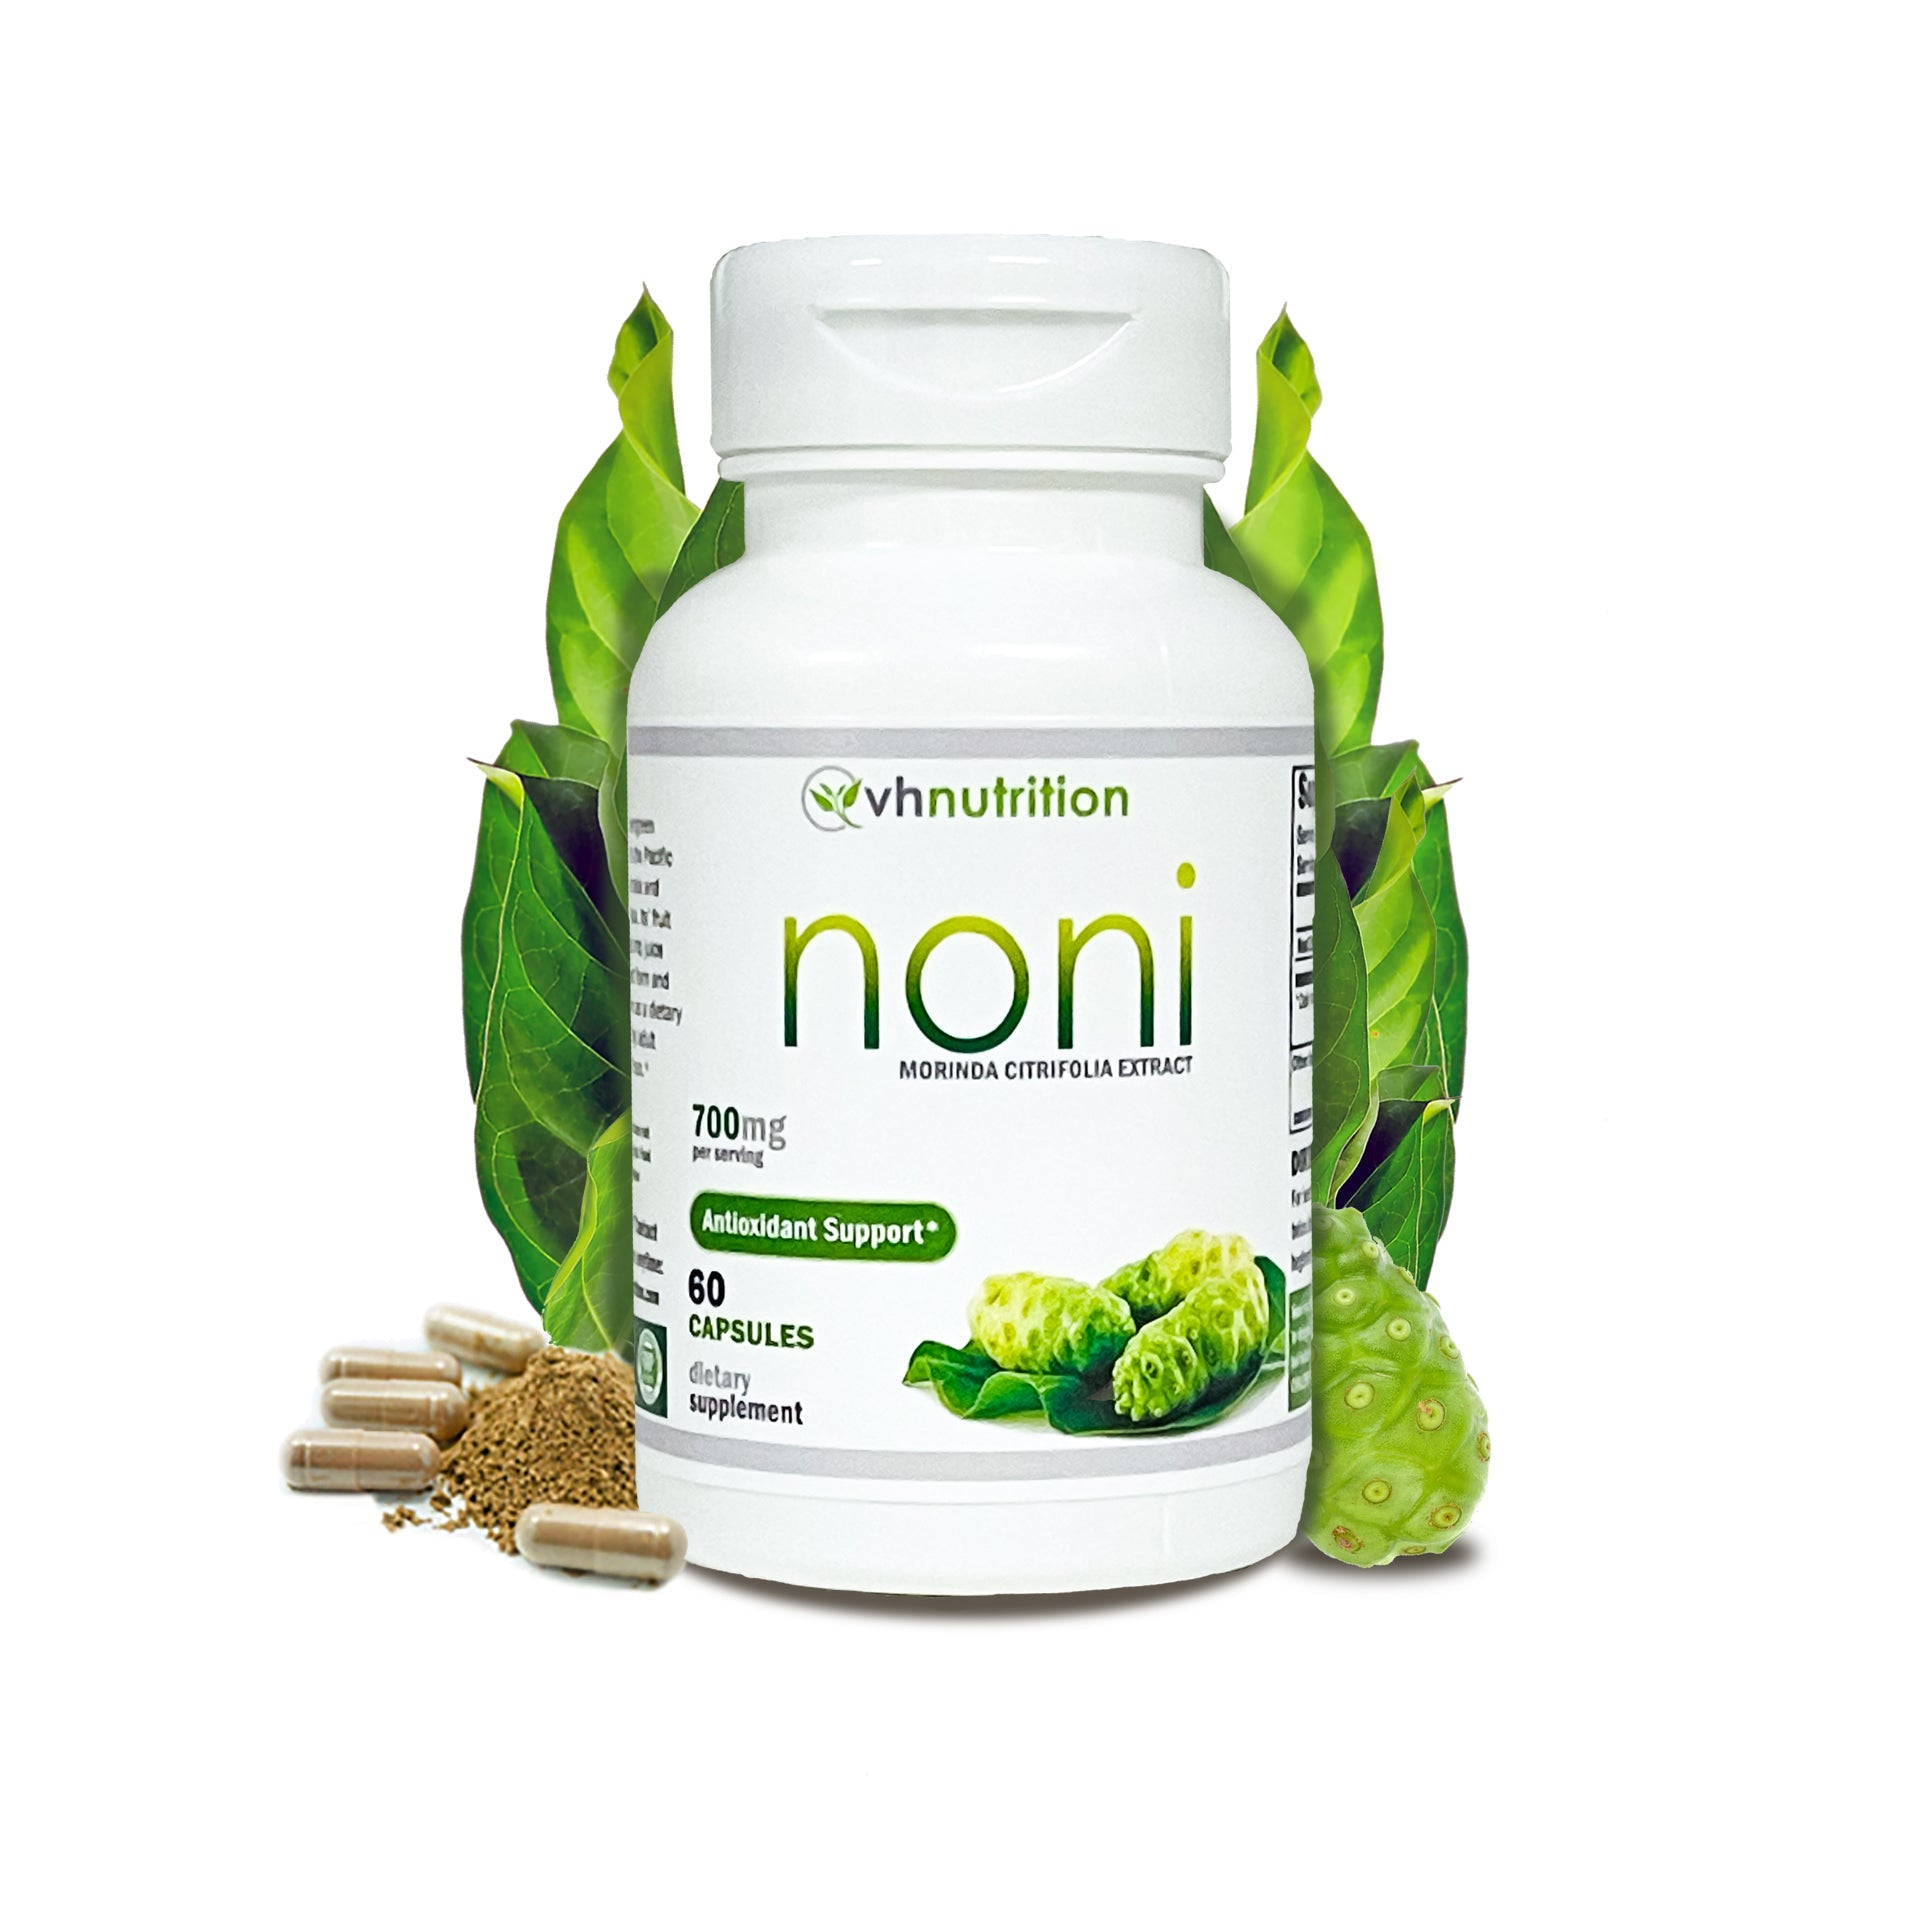 VH Nutrition NONI Capsules | 700mg Morinda Citrifolia Extract Pills | Natural Antioxidant* Supplement | 60 Capsules